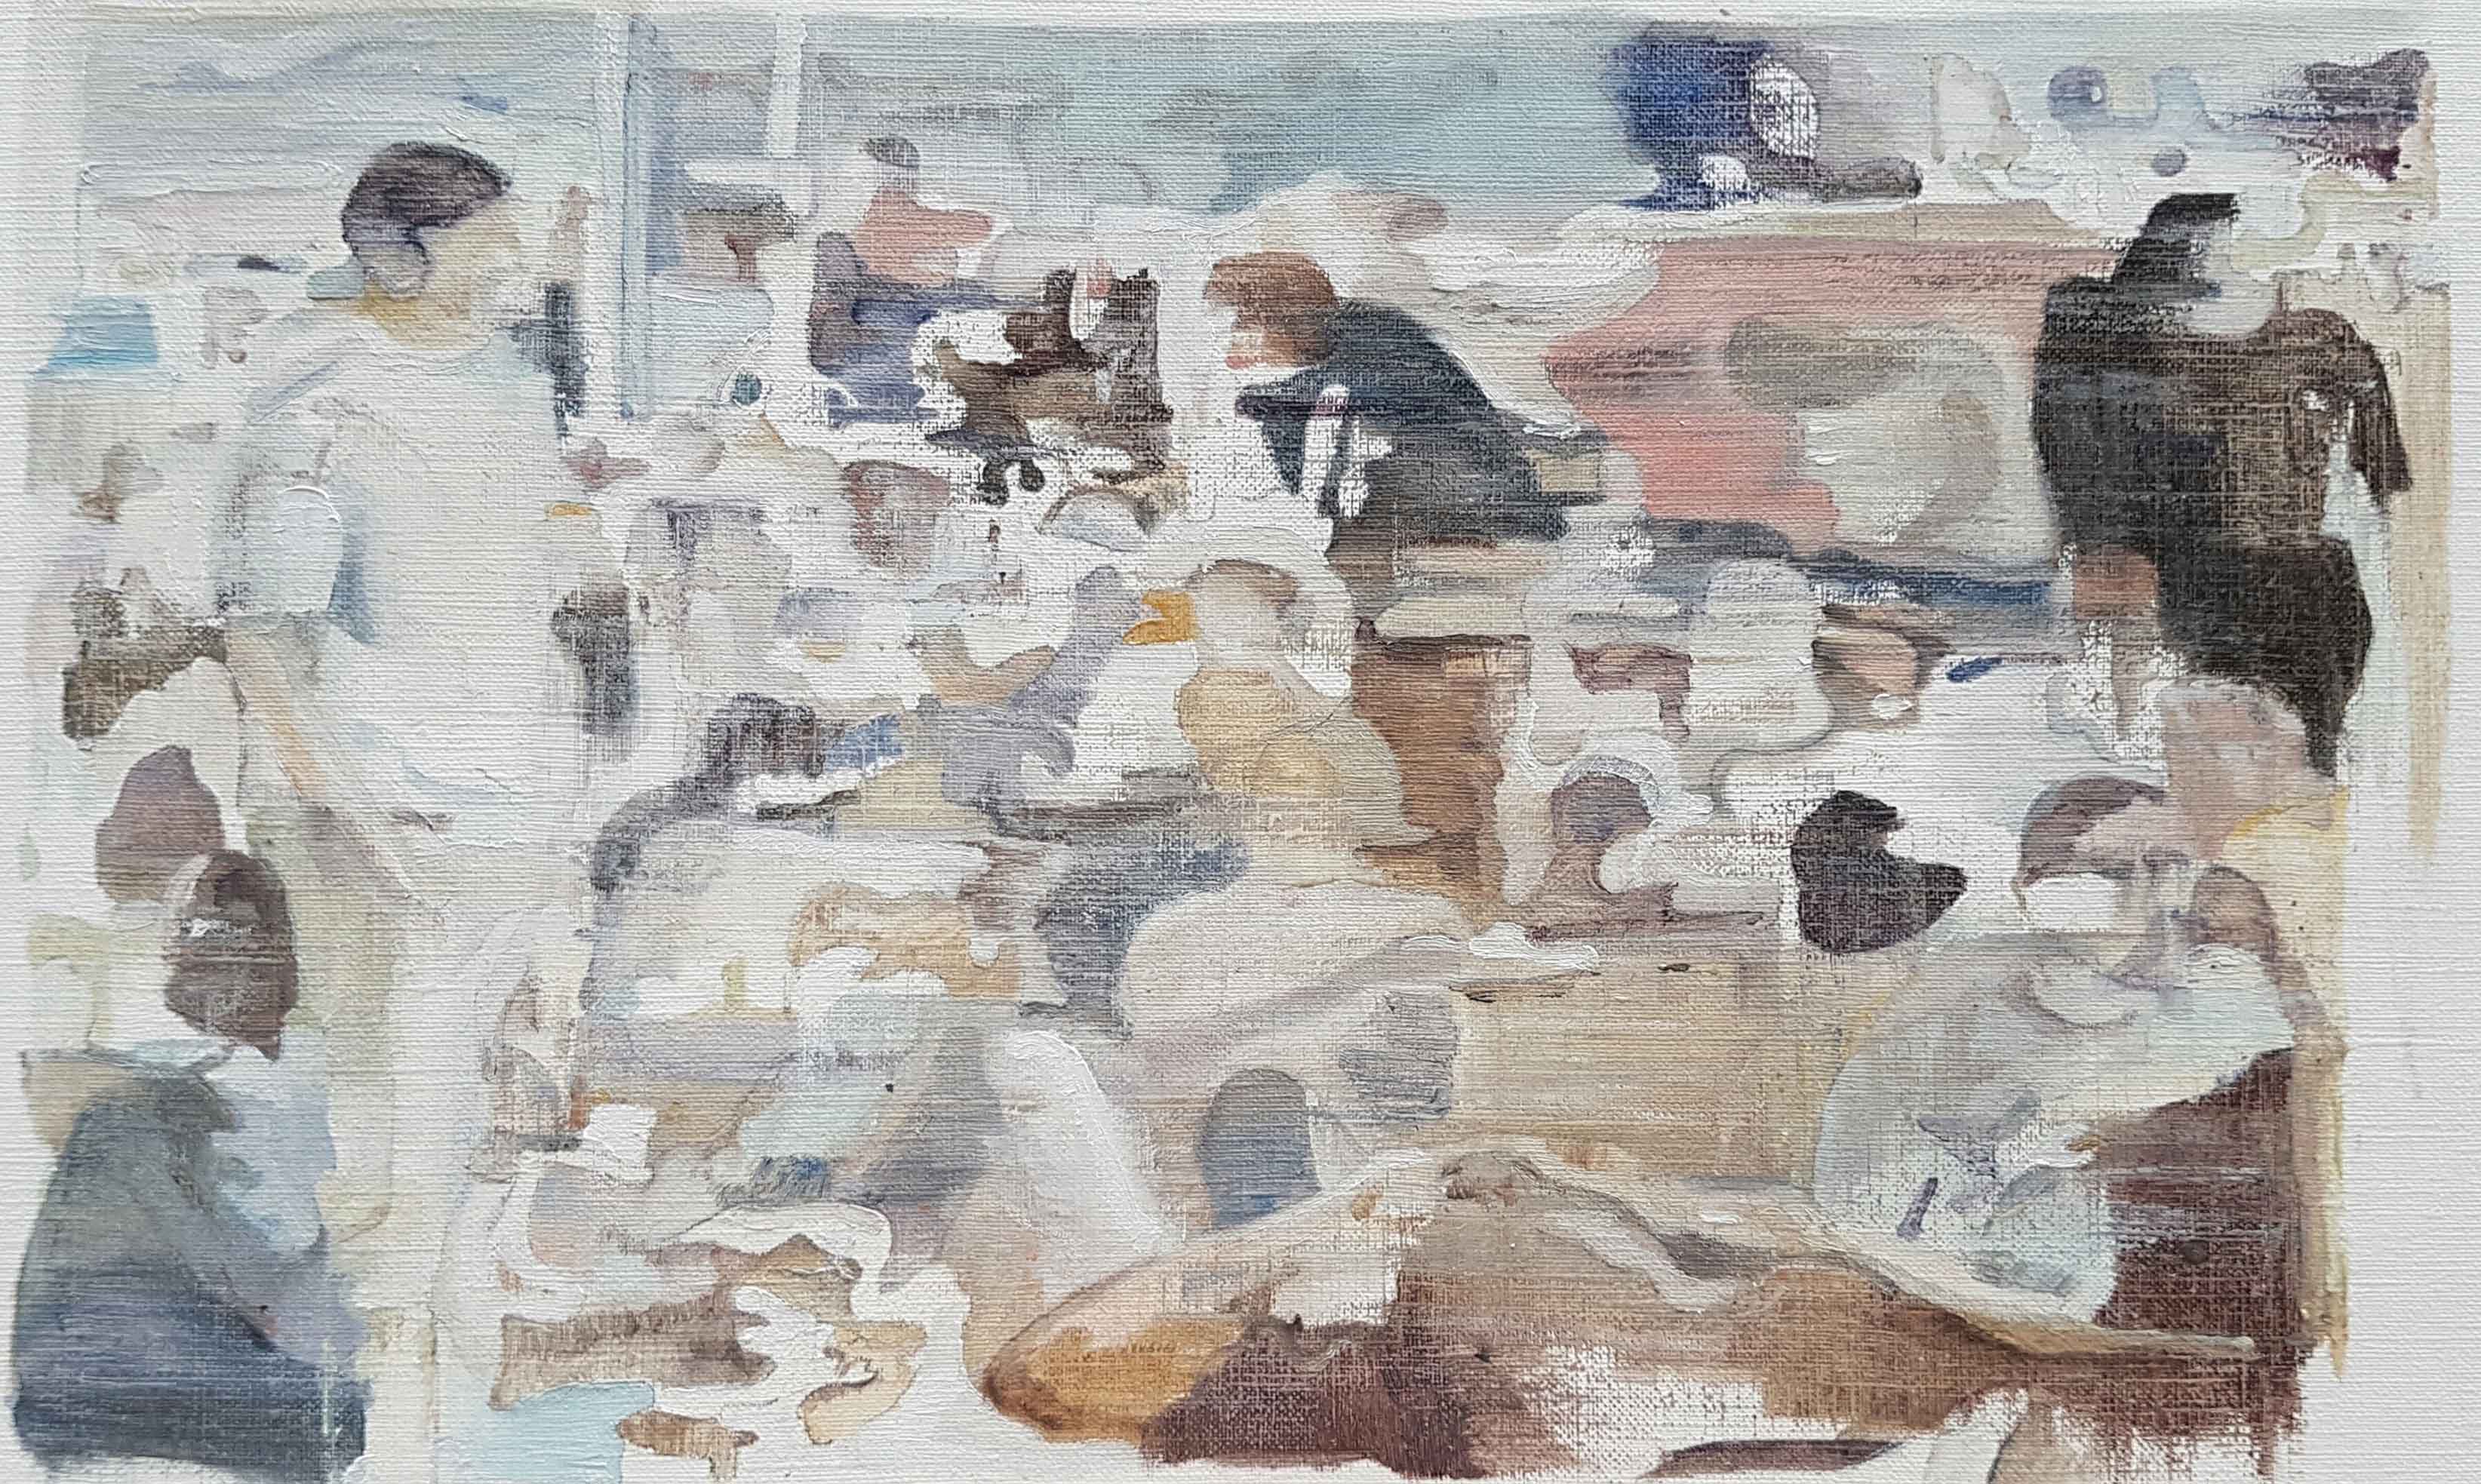 Yasaman Nozari, Untitled, 2018, Oil on matboard, 40 x 30 cm